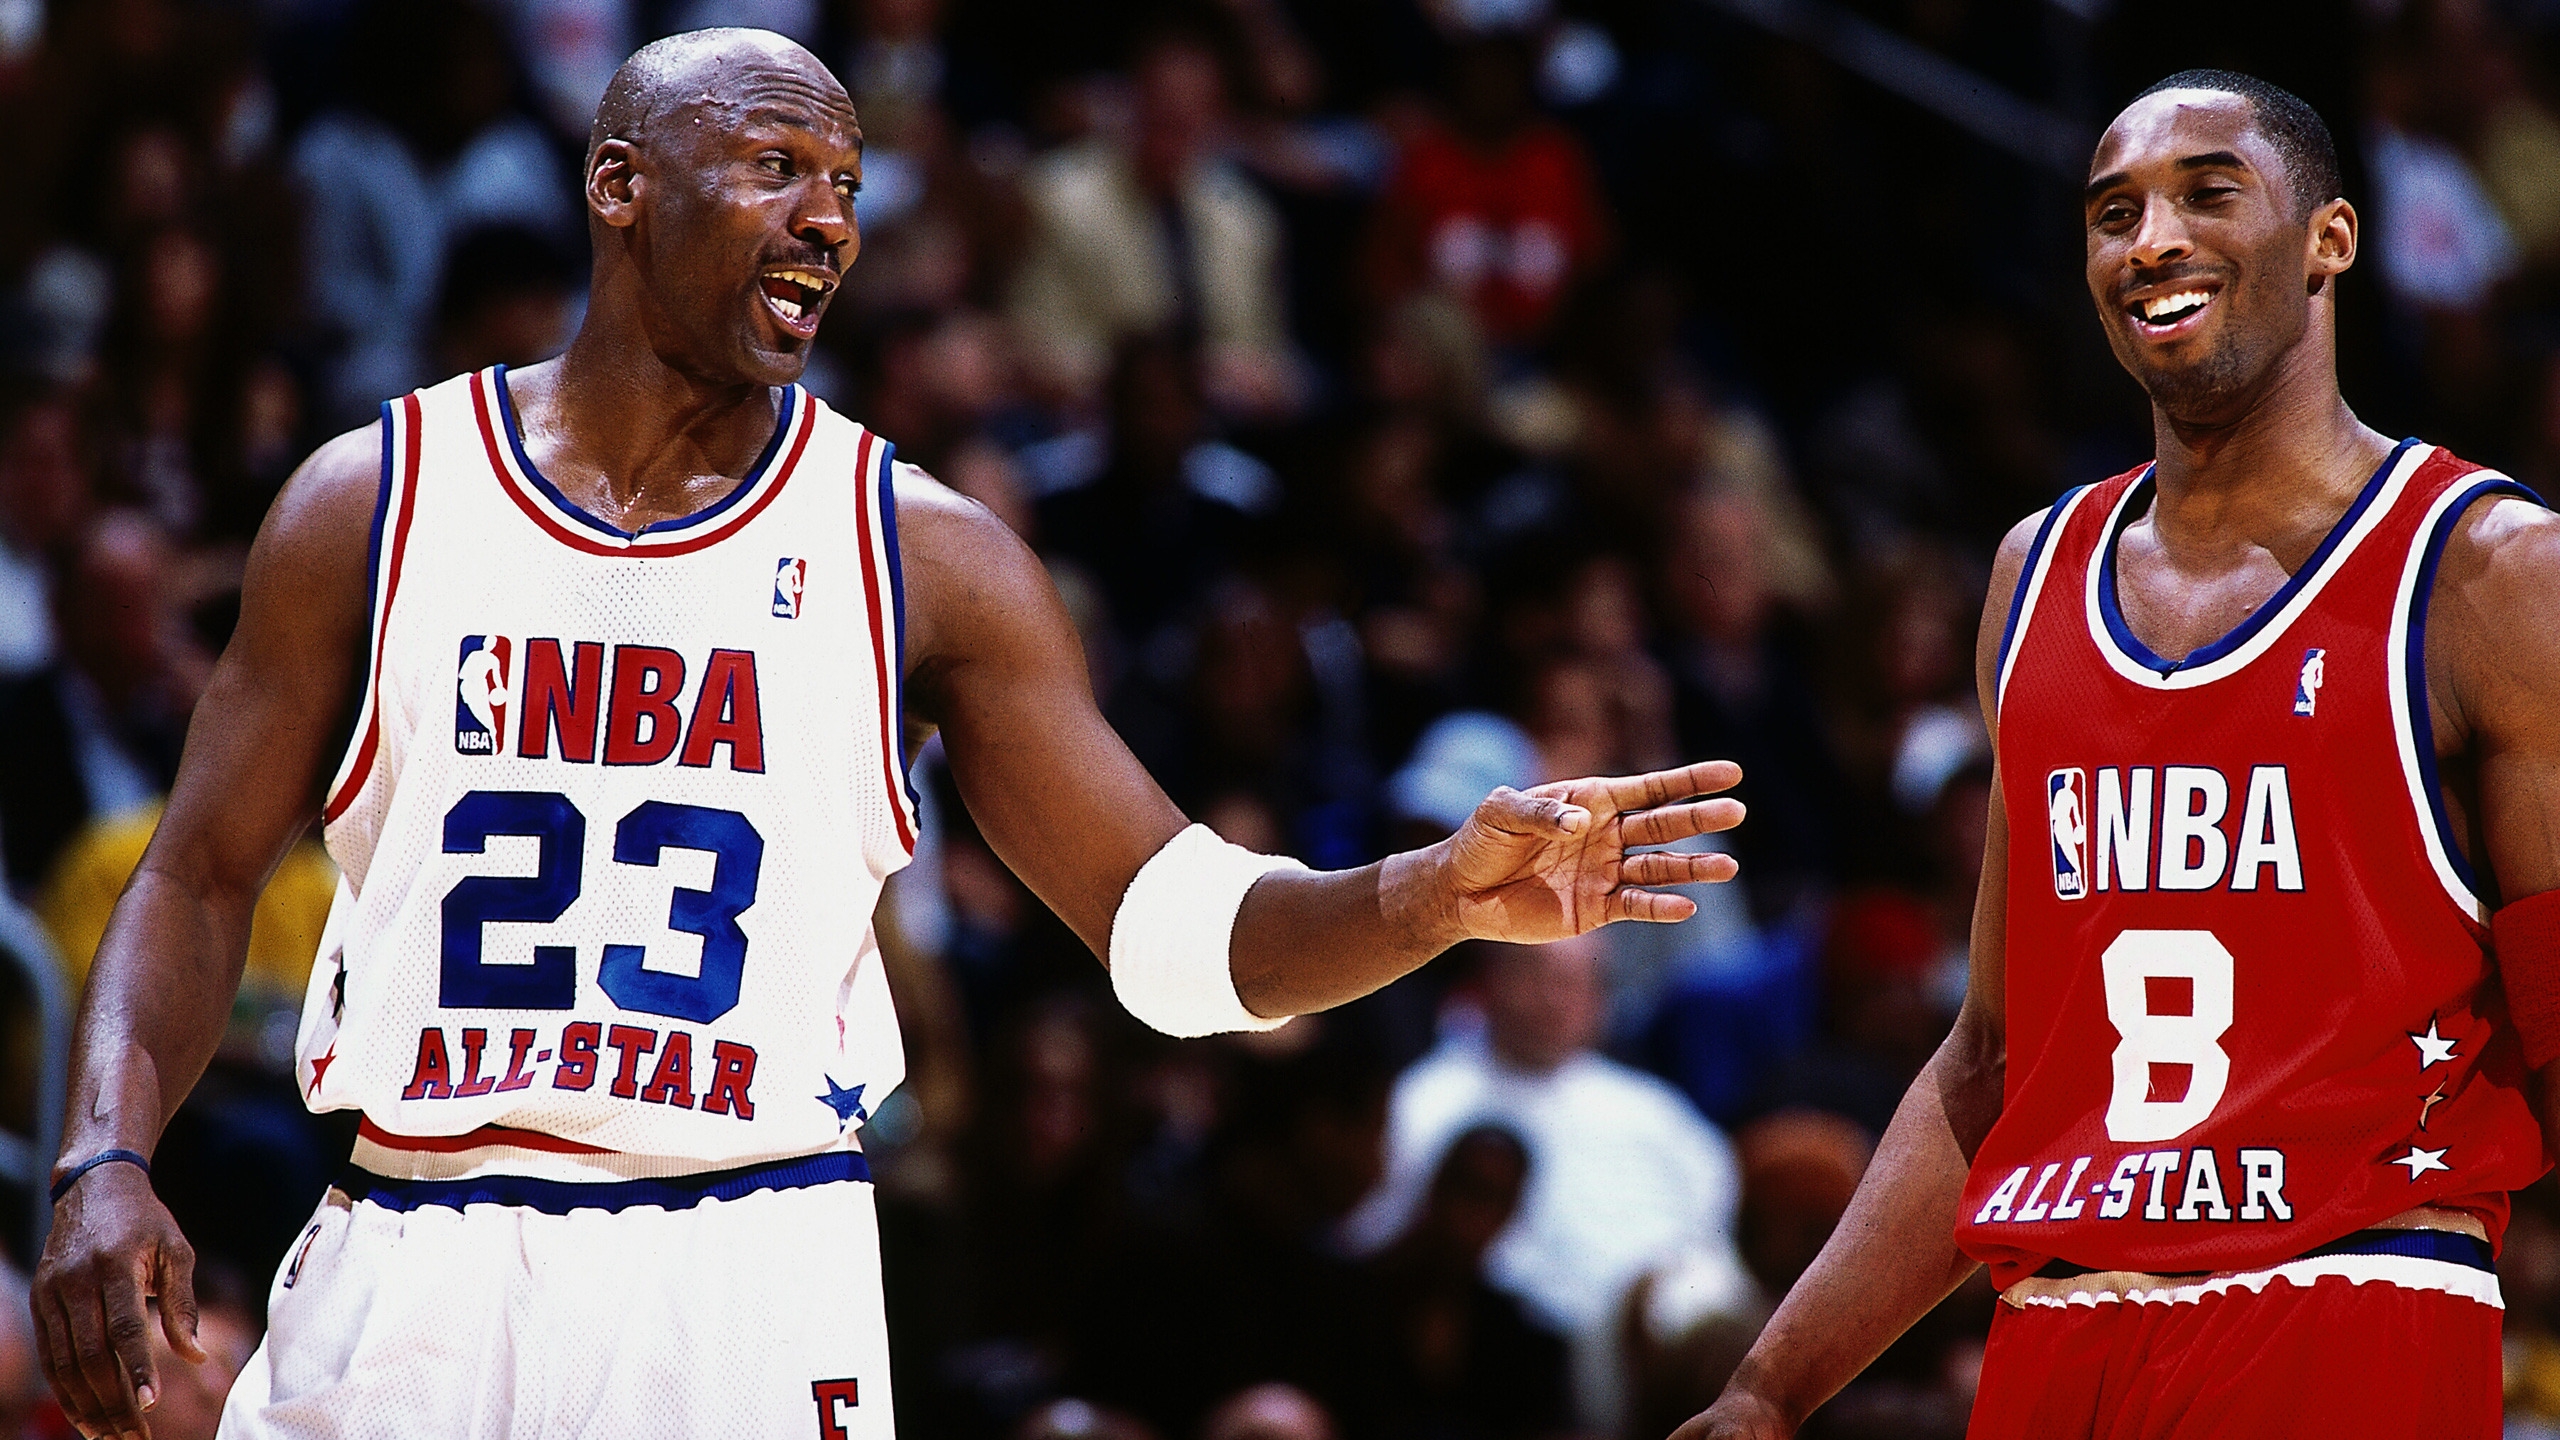 Kobe Bryant and Michael Jordan for 2560x1440 HDTV resolution